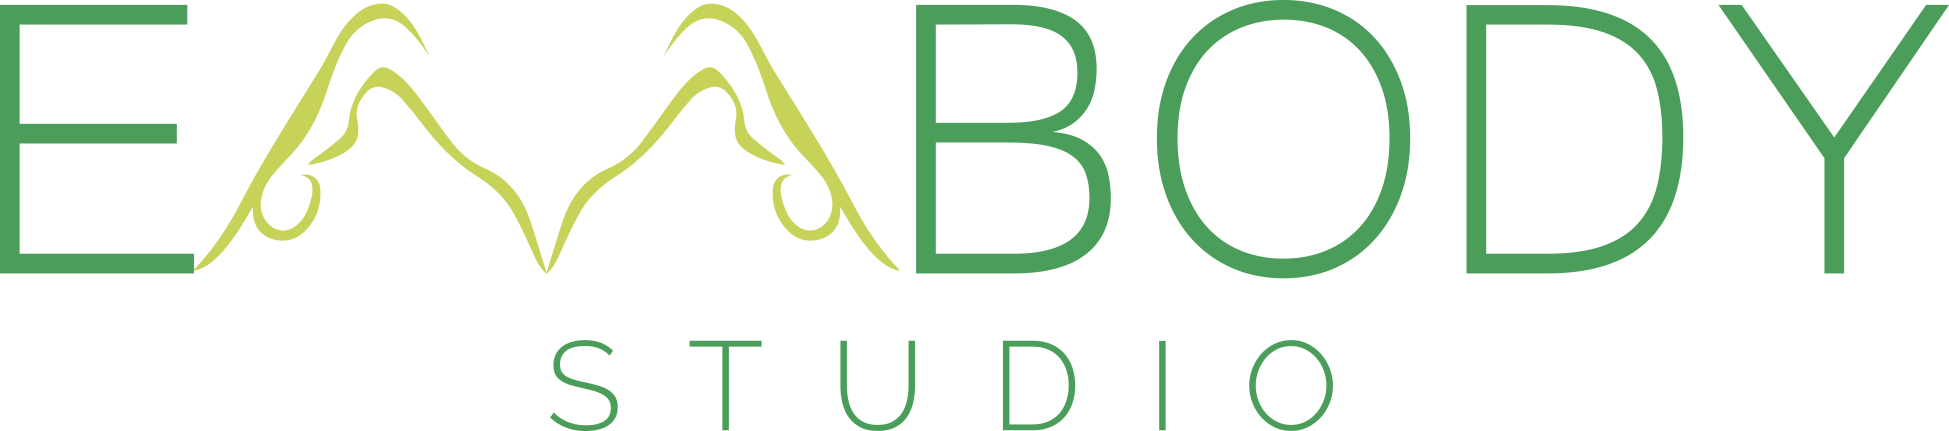 logo-embody-studio.png